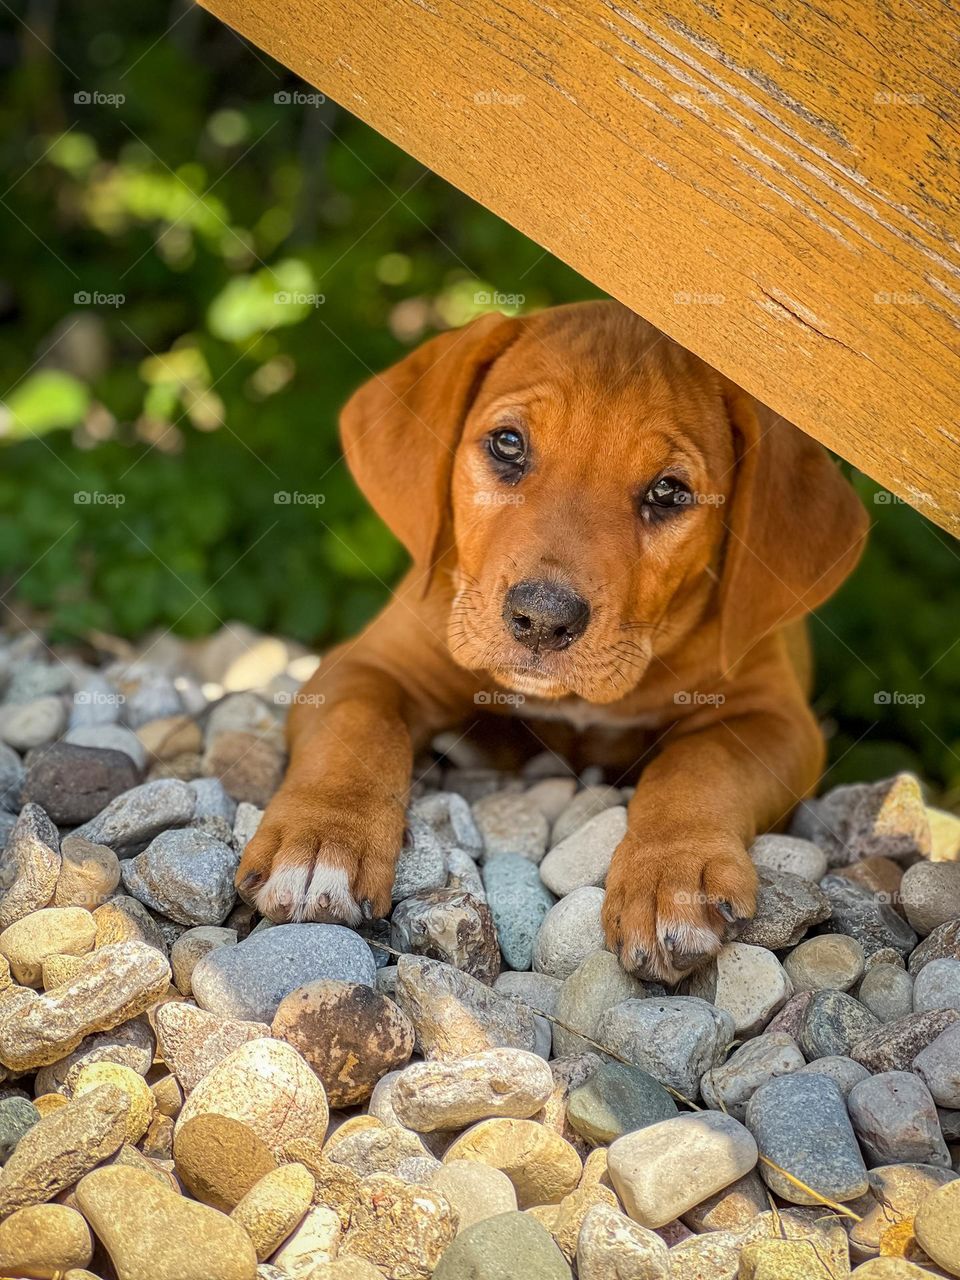 Peek-a-boo puppy